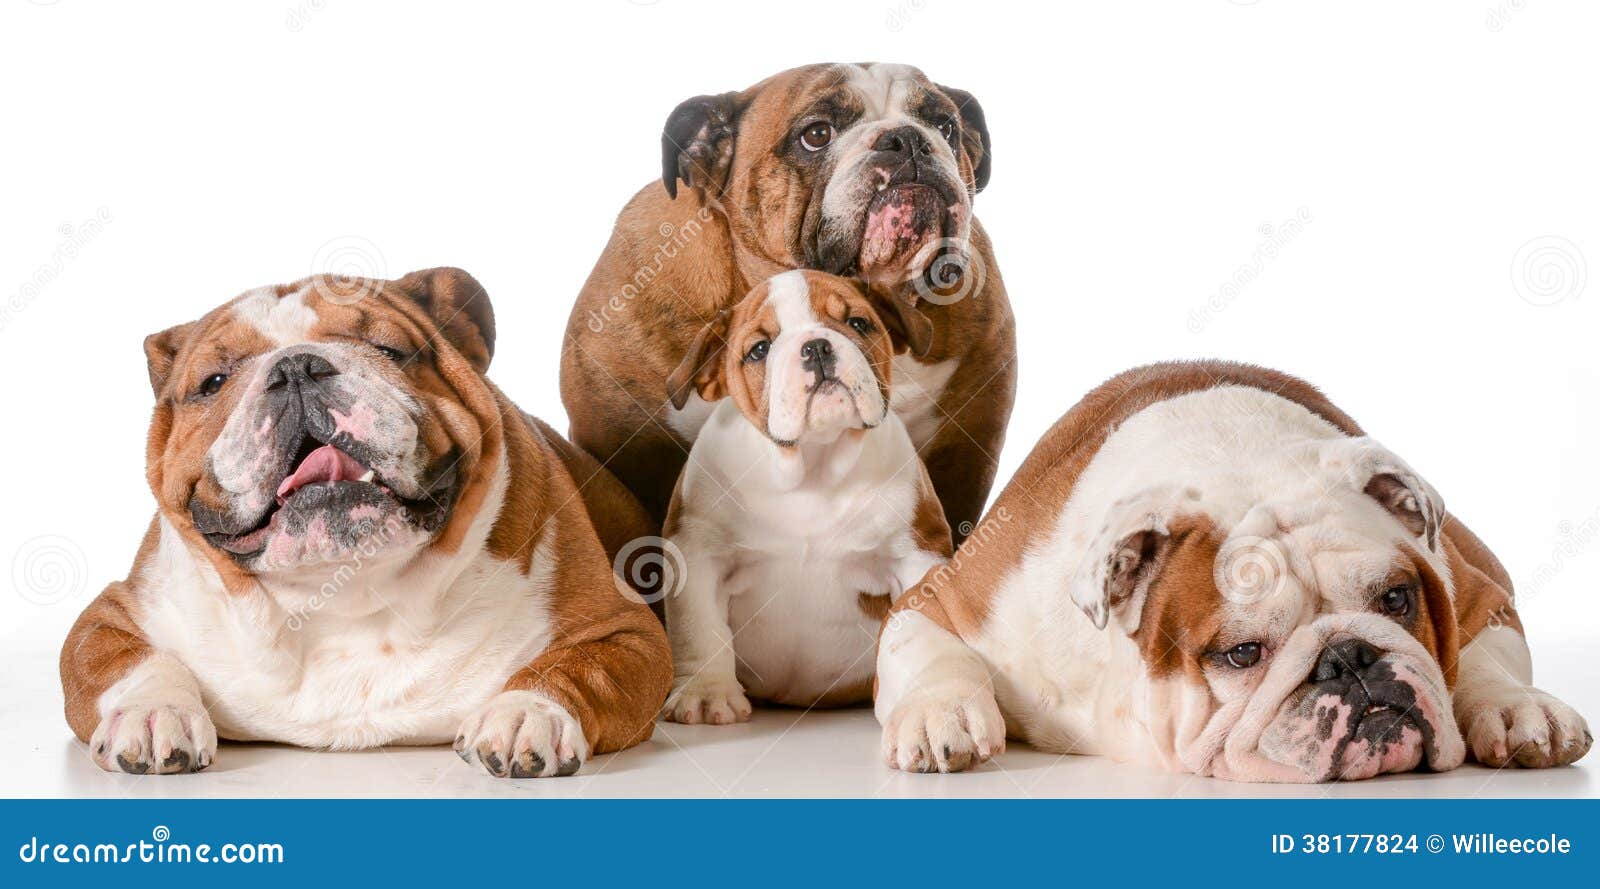 family of bulldogs